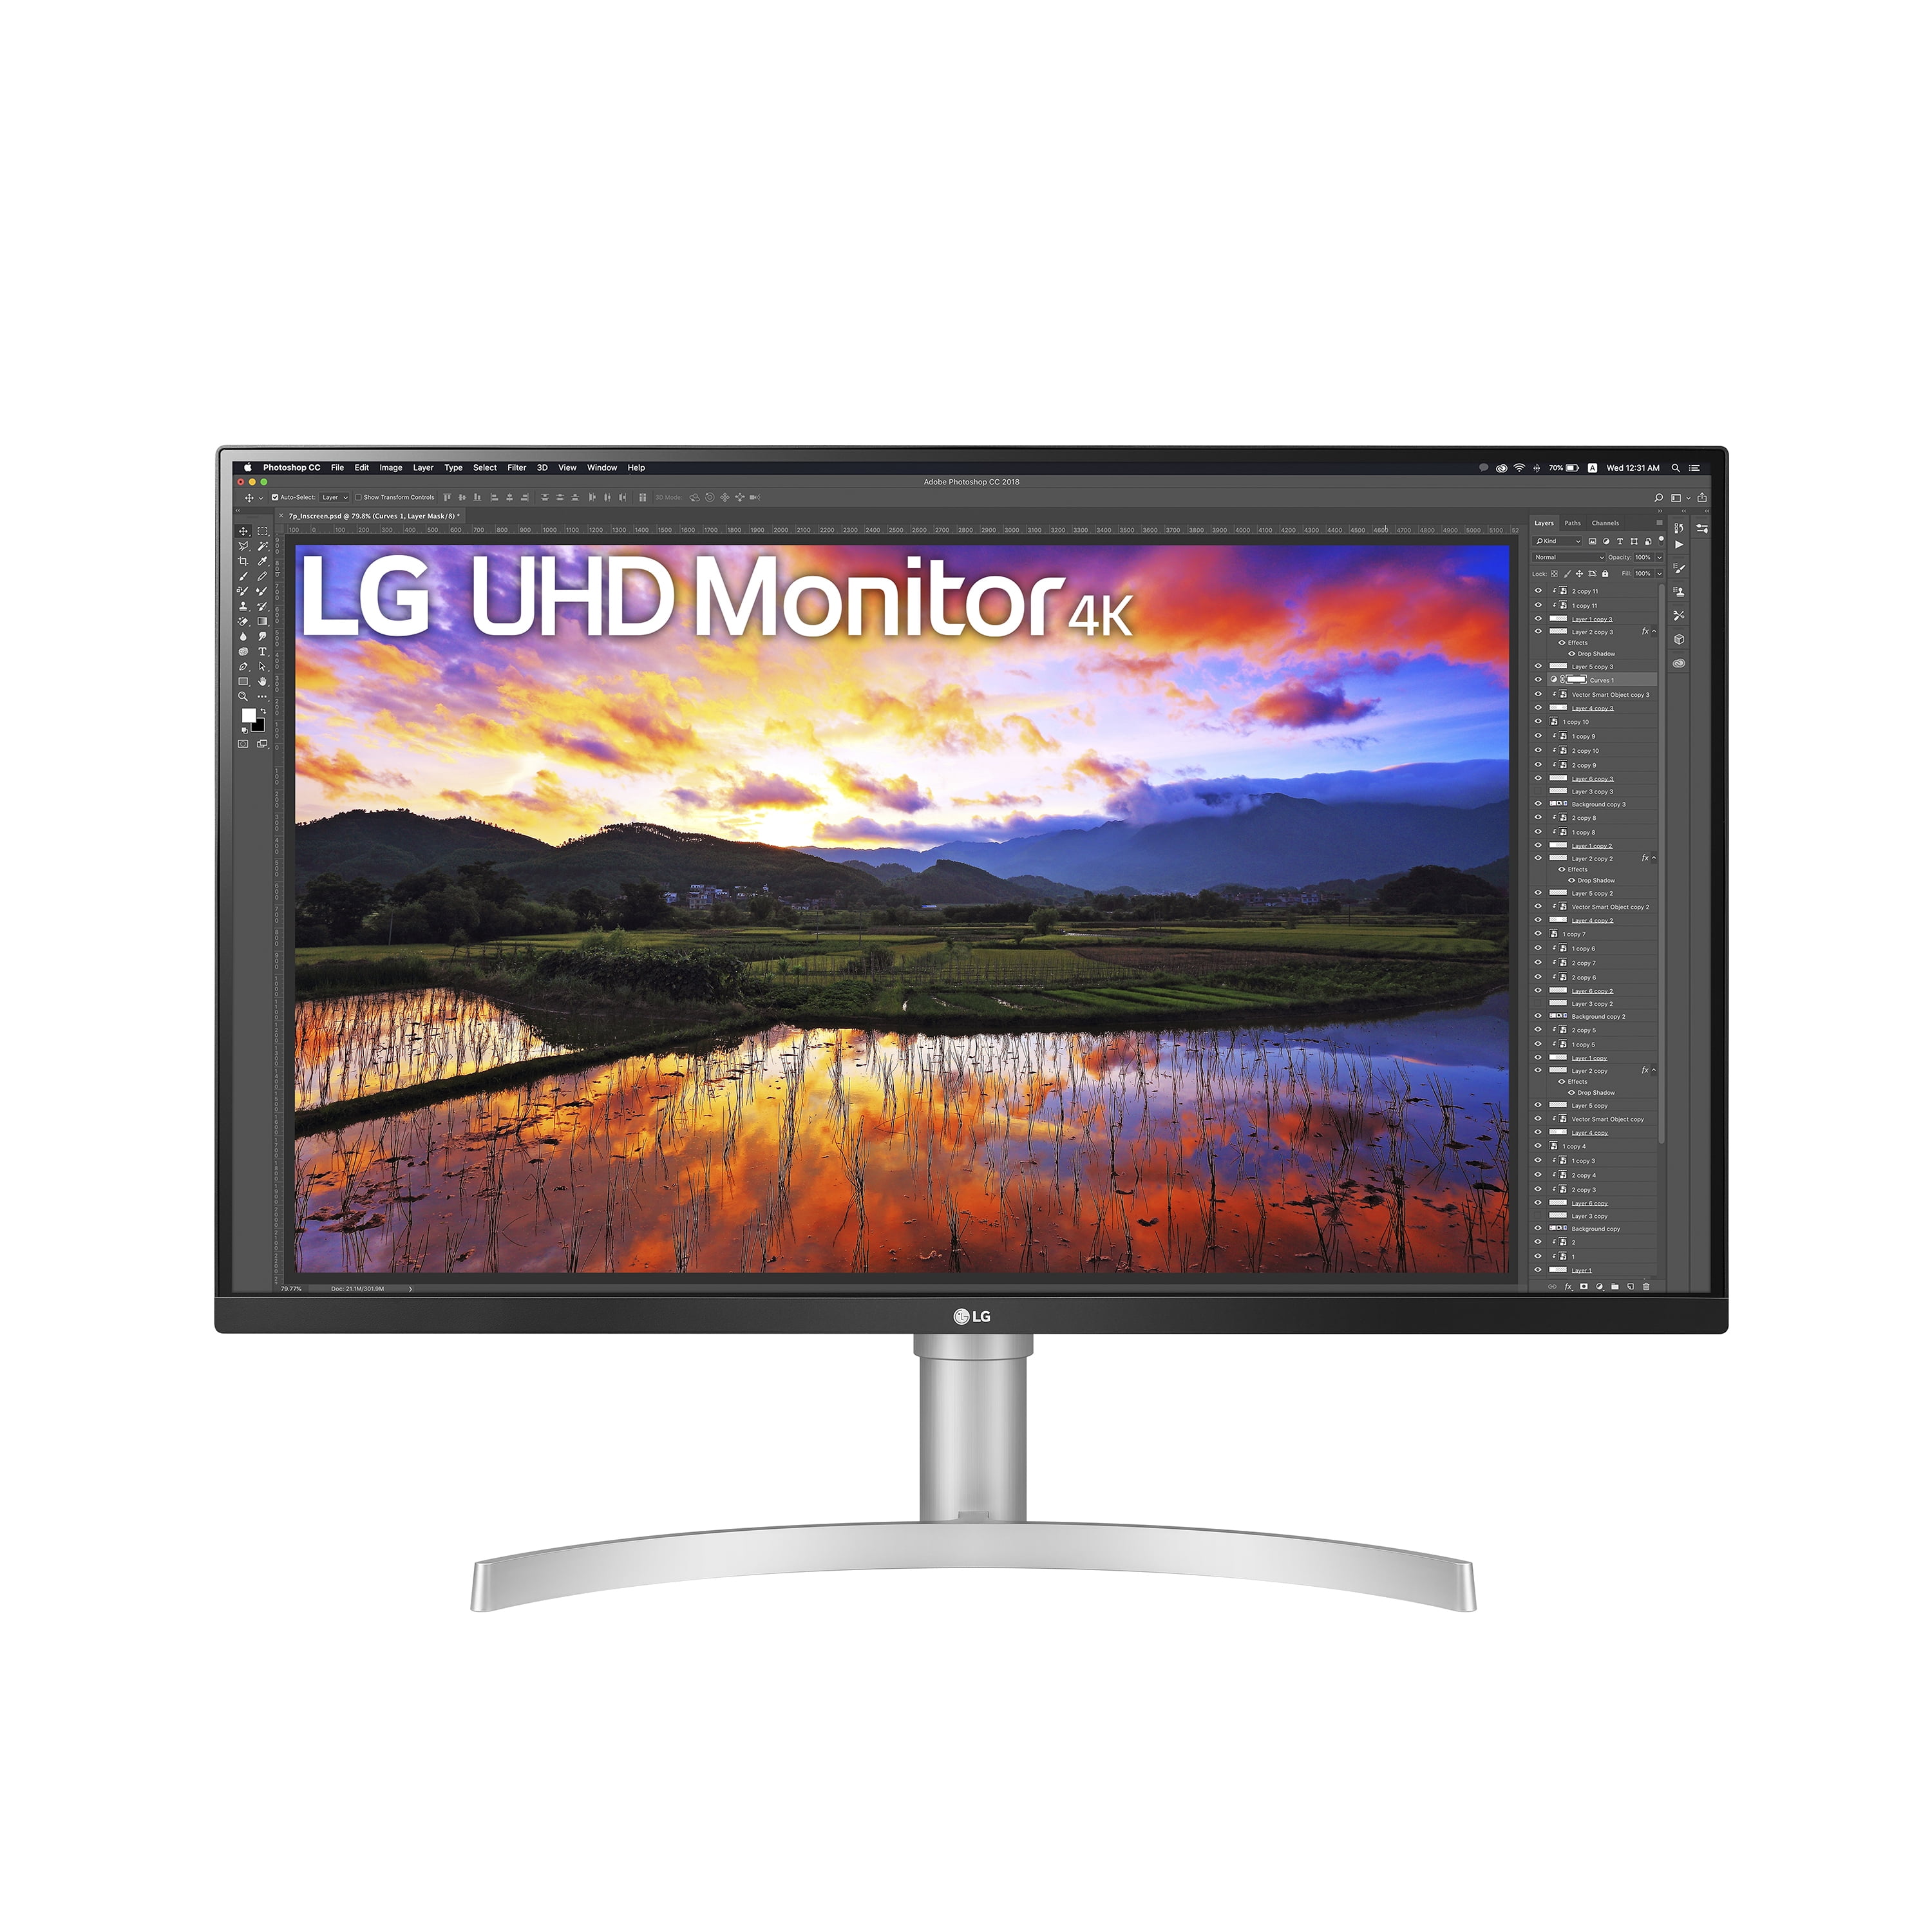 LG 32UL500-W 32'' UHD 4K HDR Monitor - Silver, White - Walmart.com